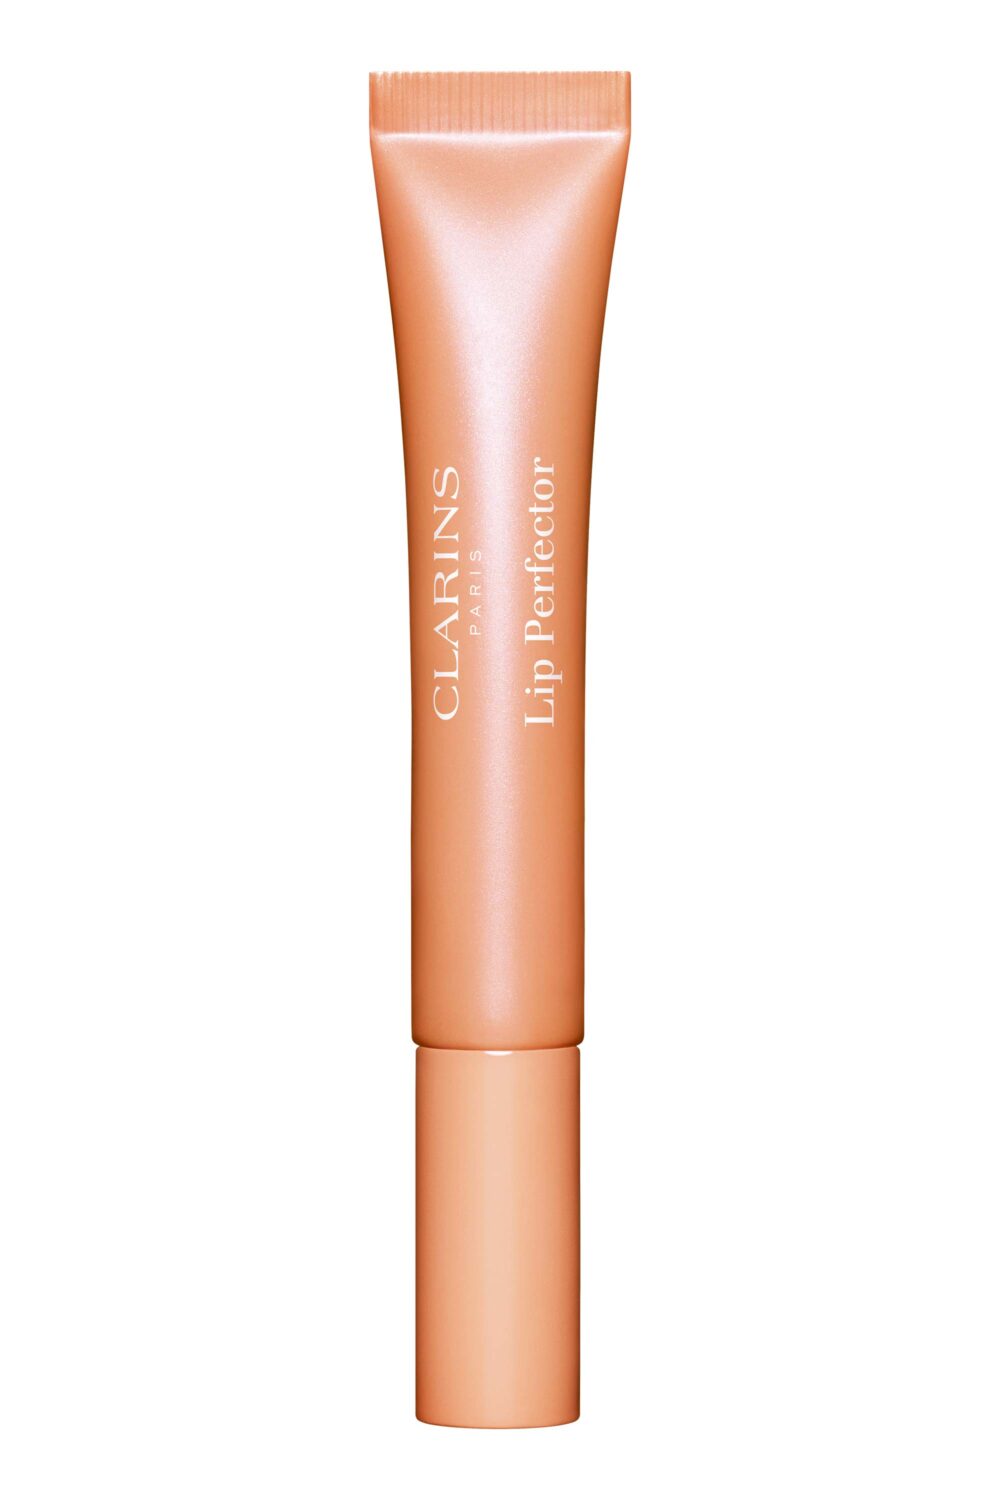 Clarins - Embellisseur lèvres et joues Glow Gloss 22 Peach Glow